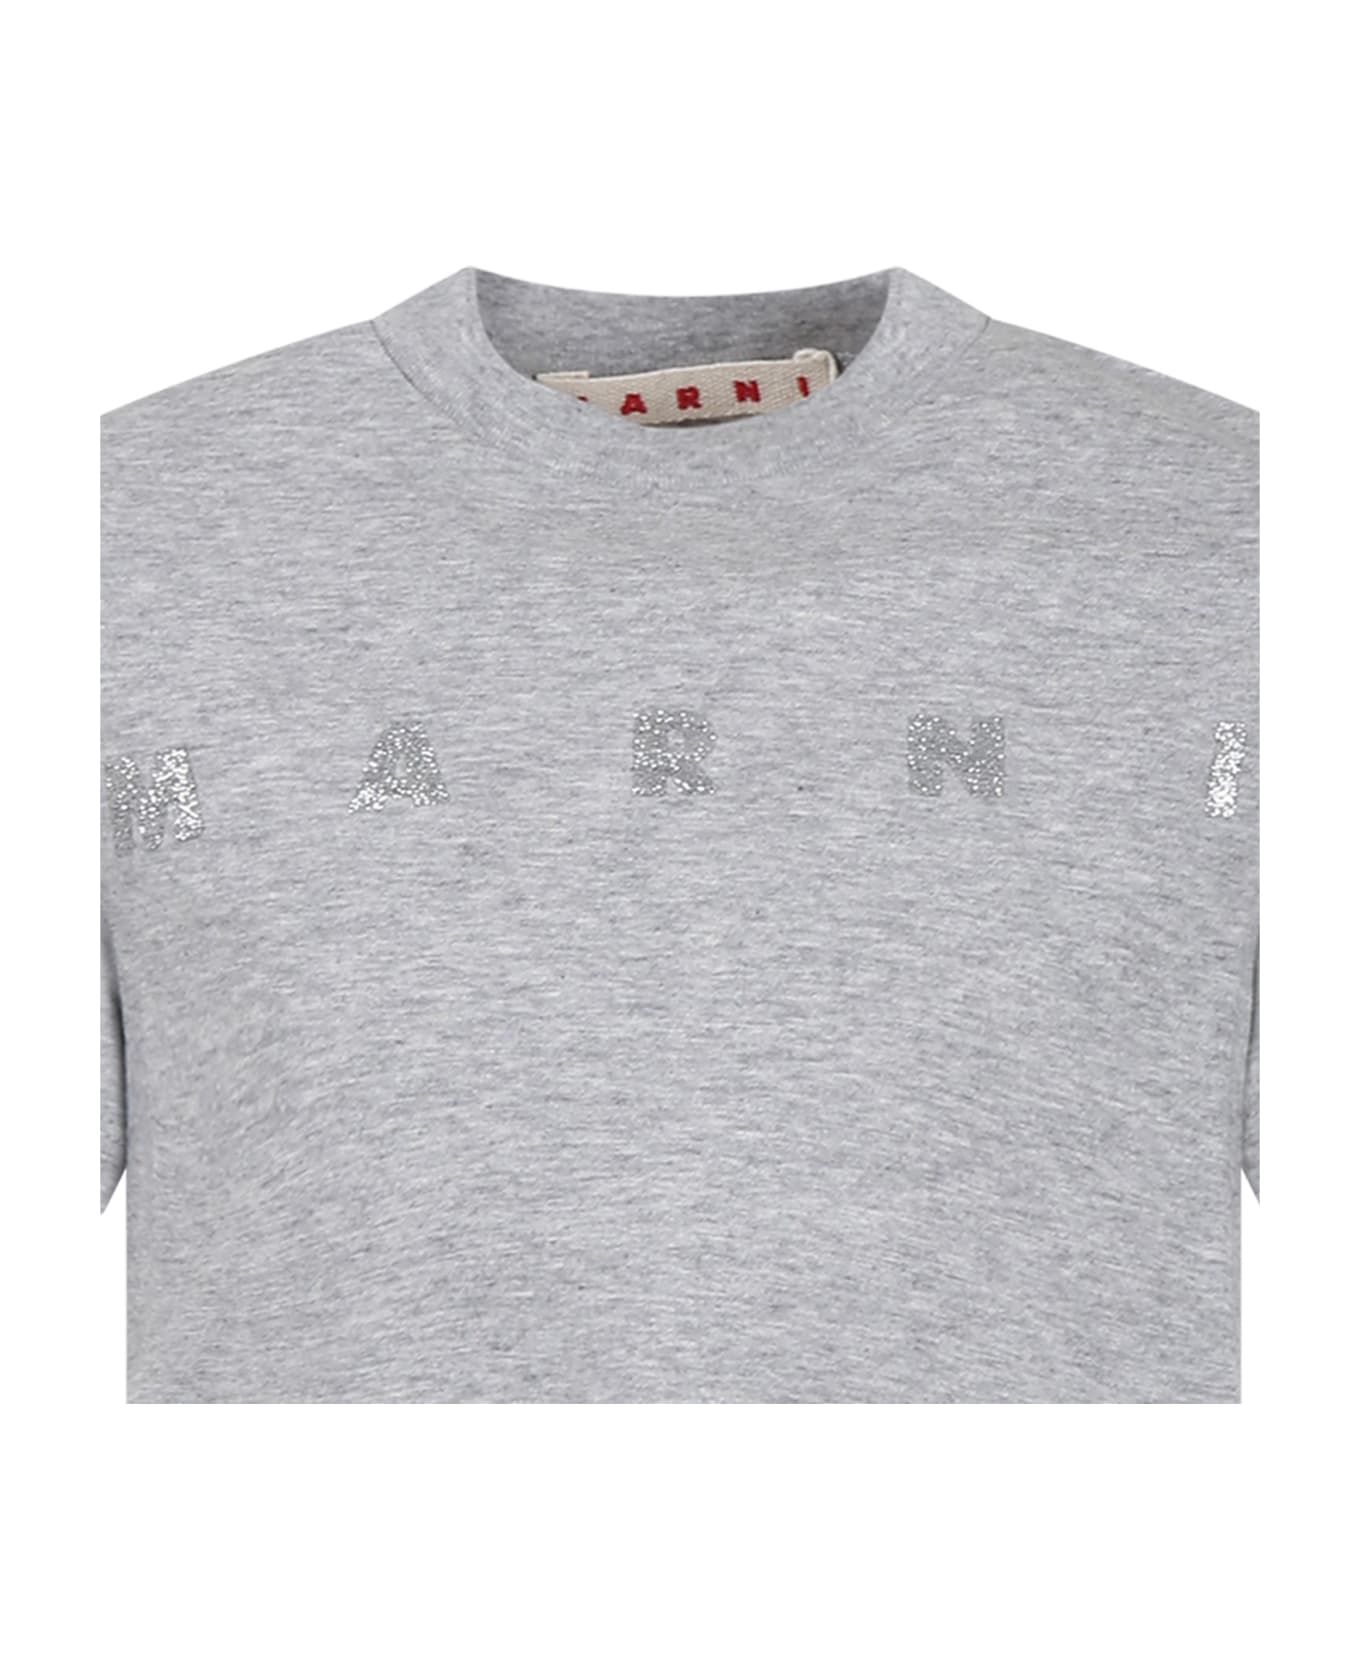 Marni Grey T-shirt For Girl With Logo - Grey